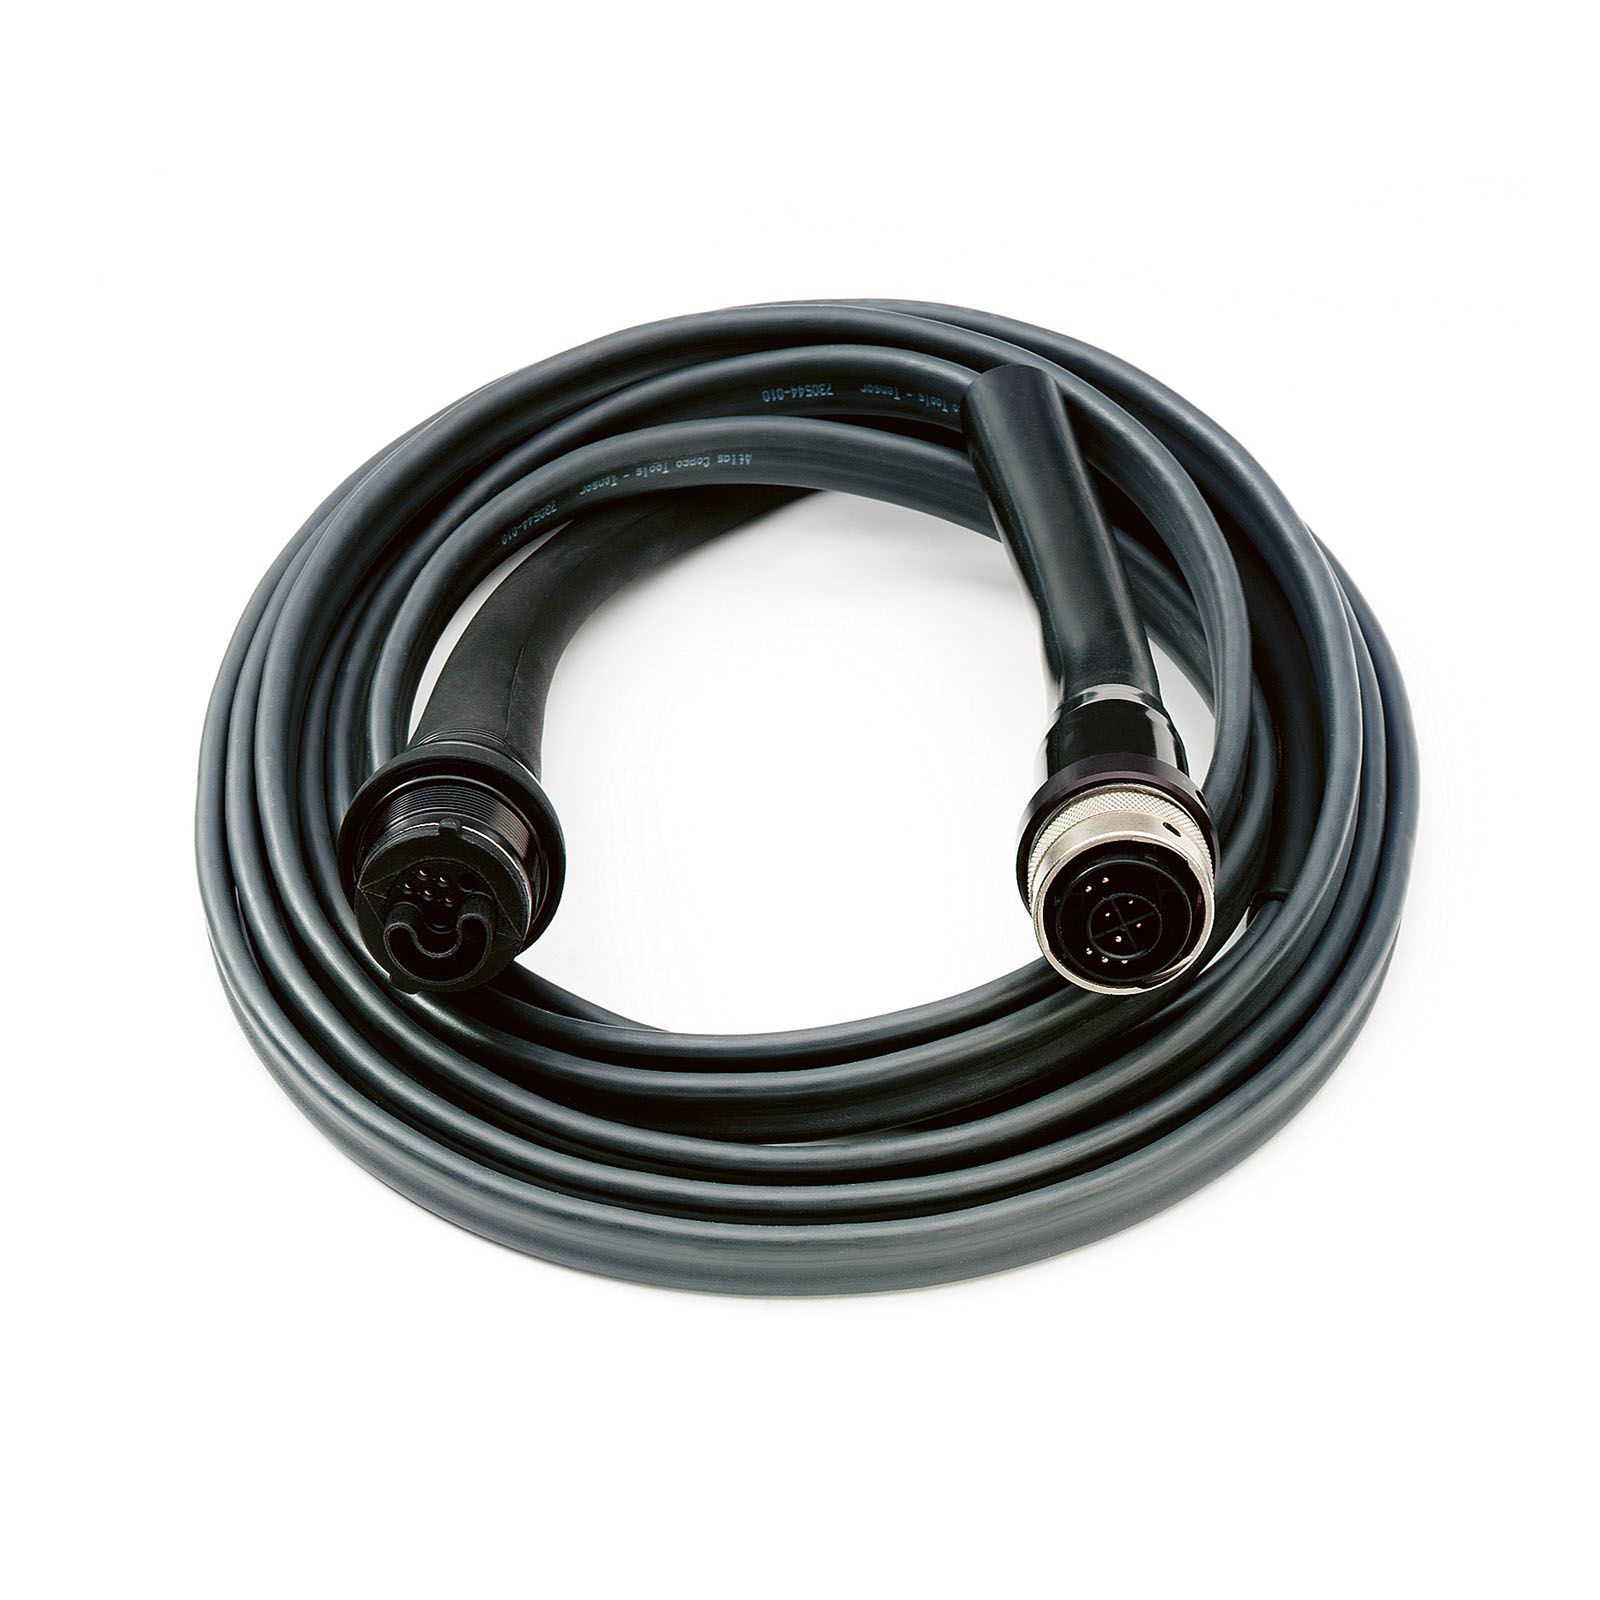 PF4 Tool cable 2M ST Produktfoto